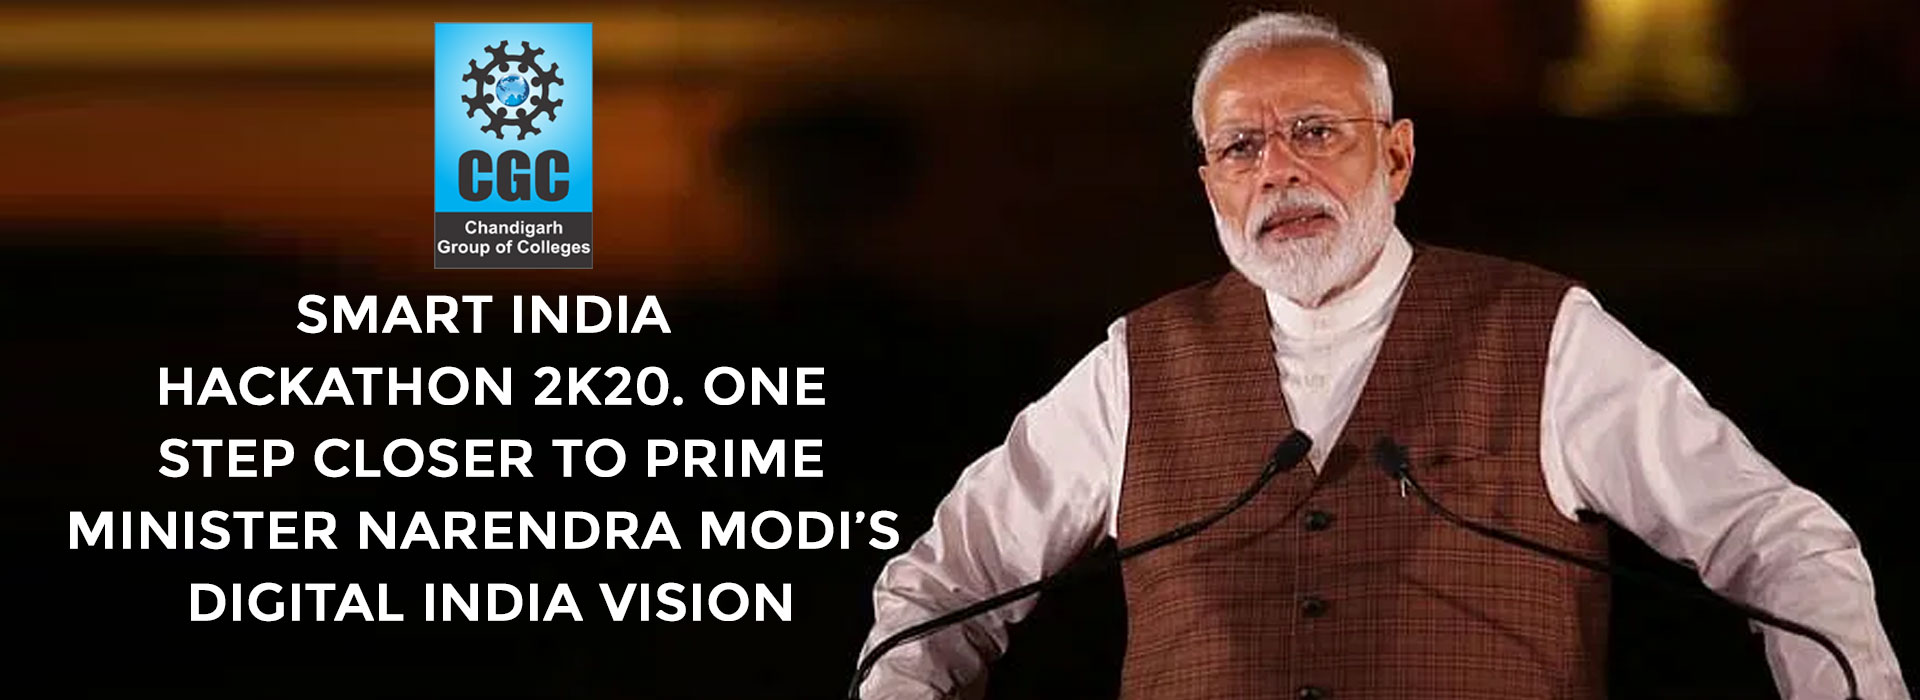 Smart India Hackathon 2K20: One step closer to Prime Minister Narendra Modi’s Digital India vision 